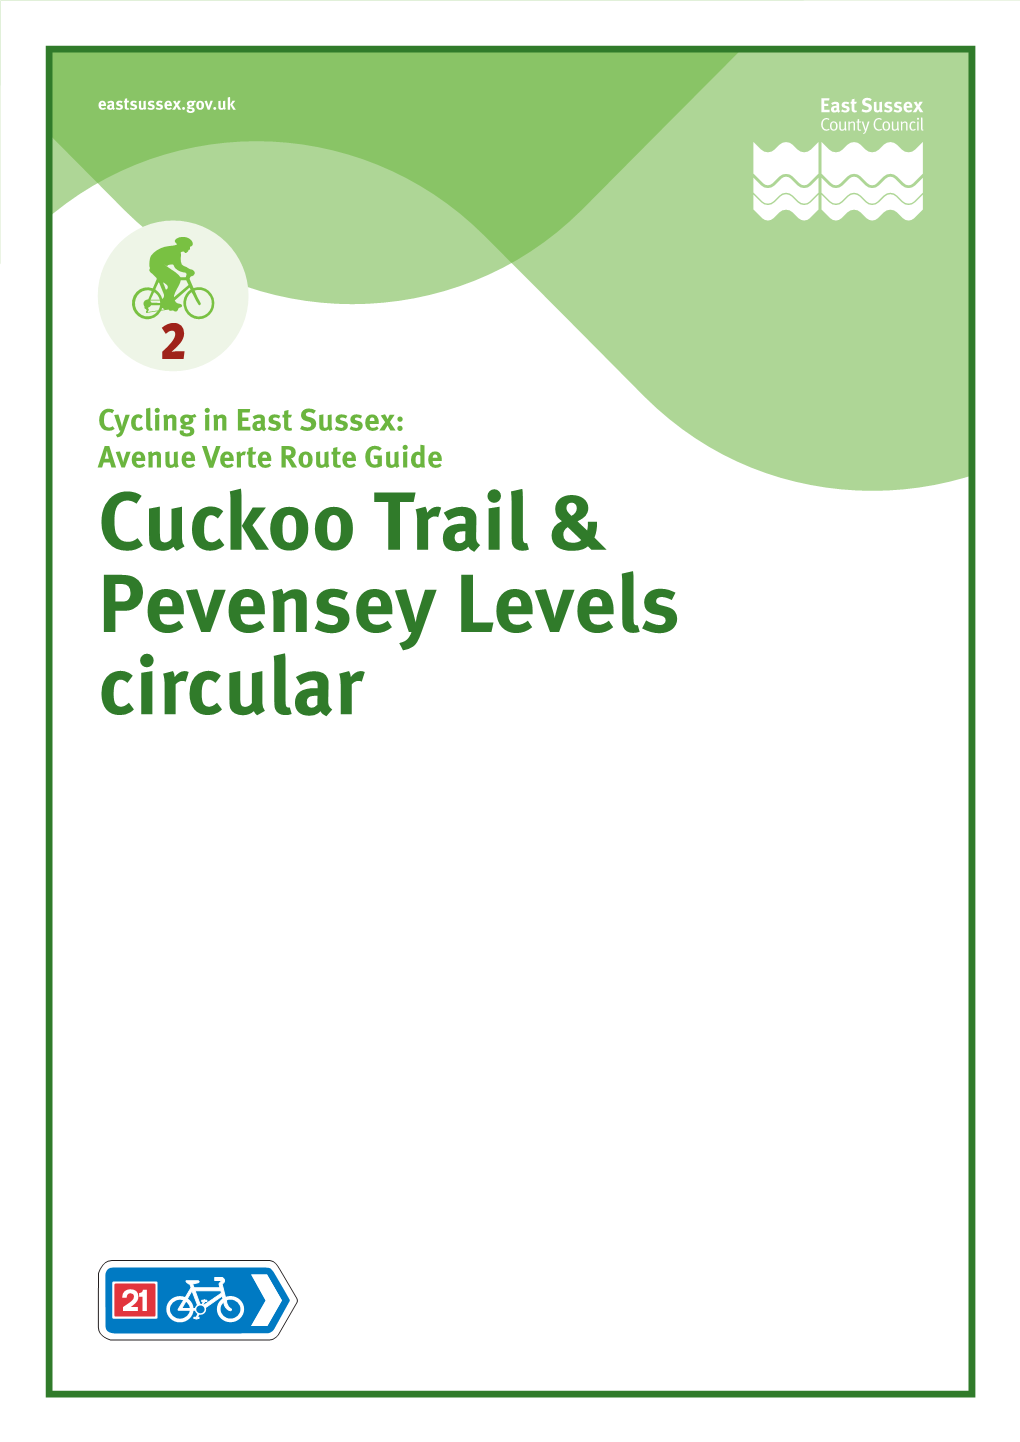 Cuckoo Trail & Pevensey Levels Circular